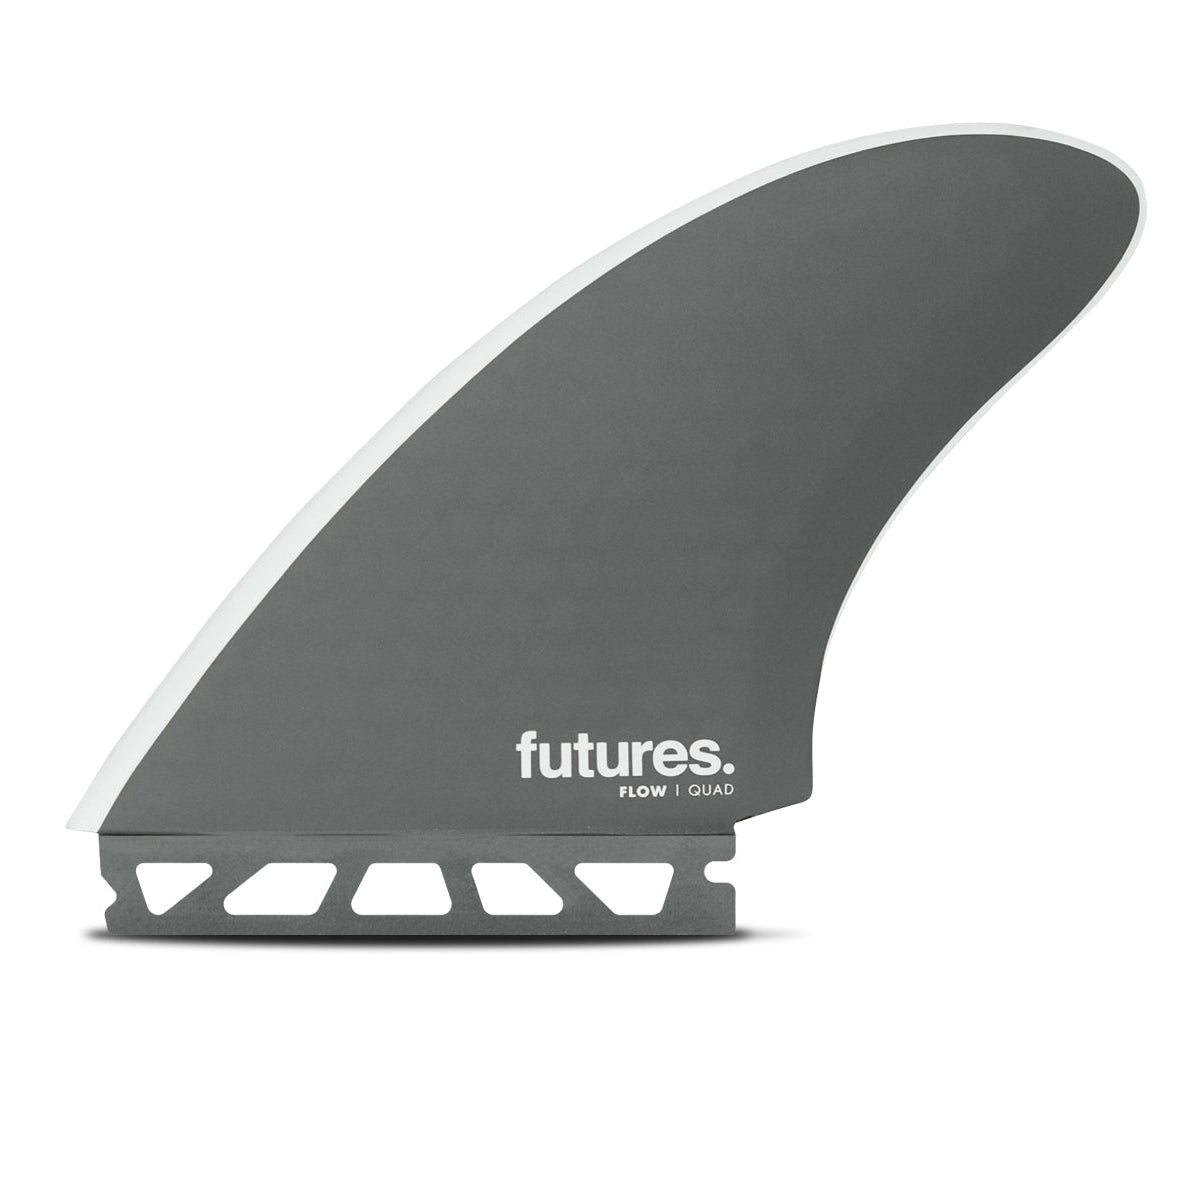 
                  
                    Futures QUAD - Flow HC Quad - Slate
                  
                